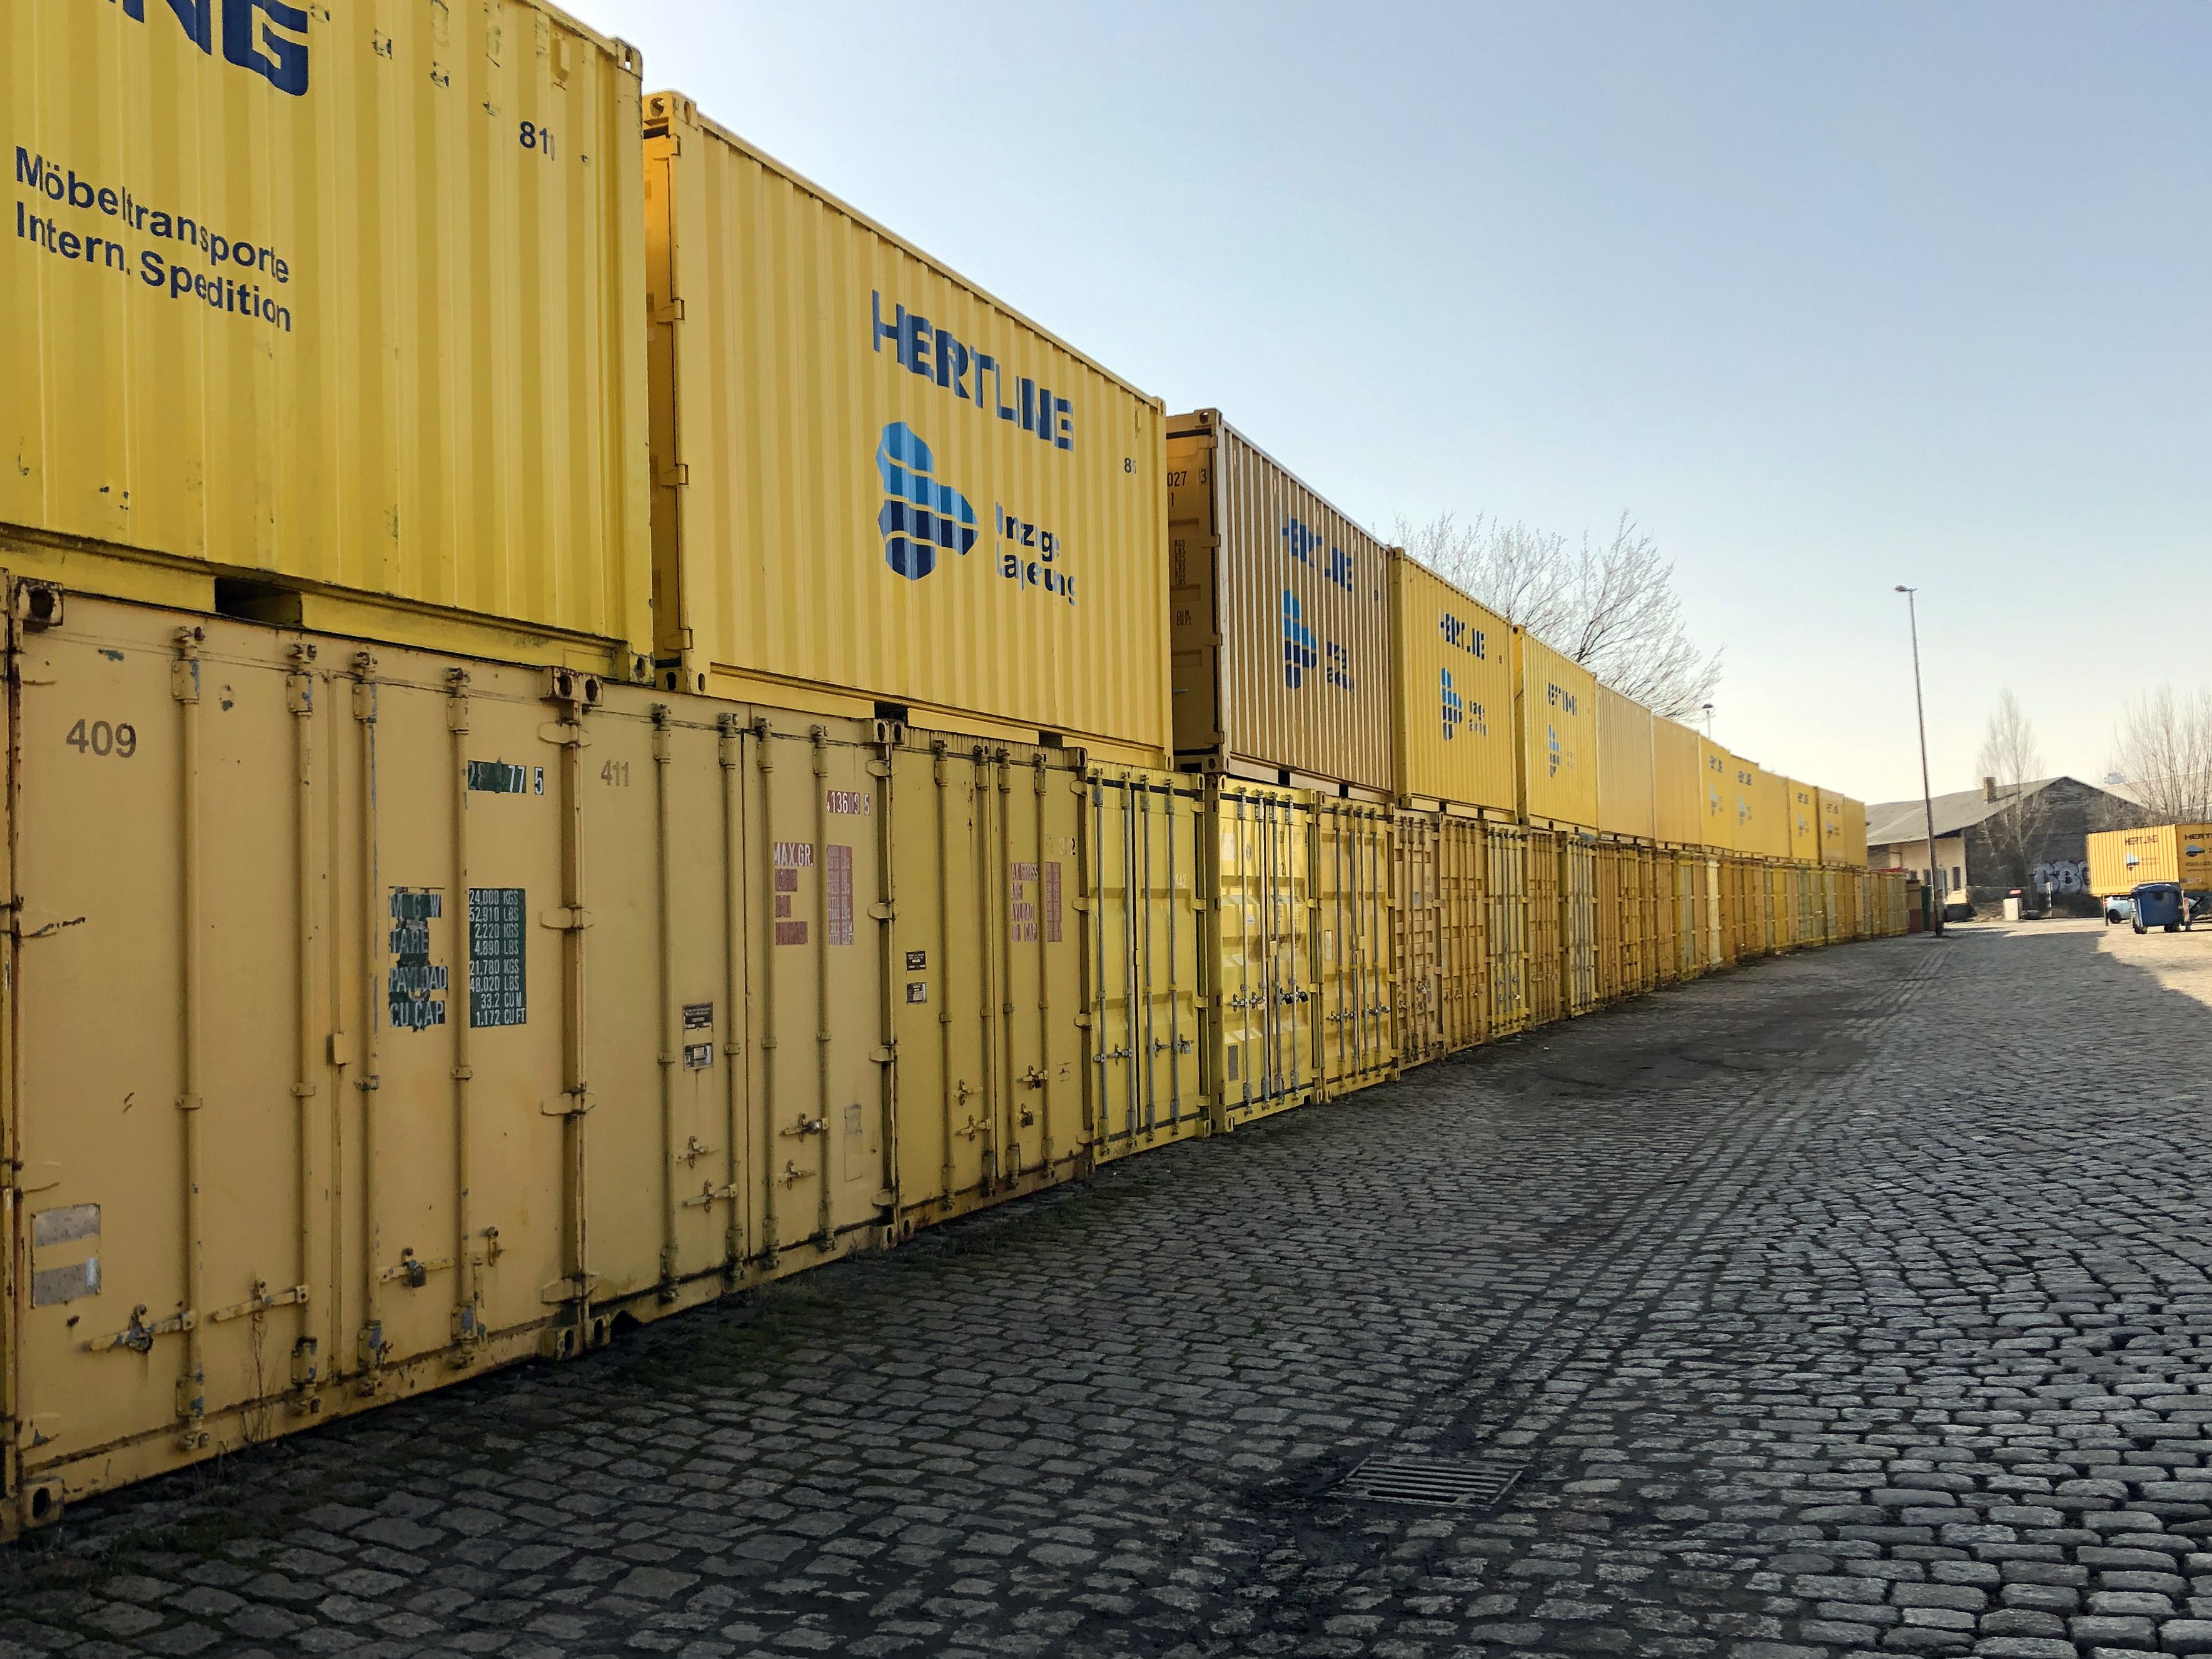 HERTLING rental container in Berlin Charlottenburg